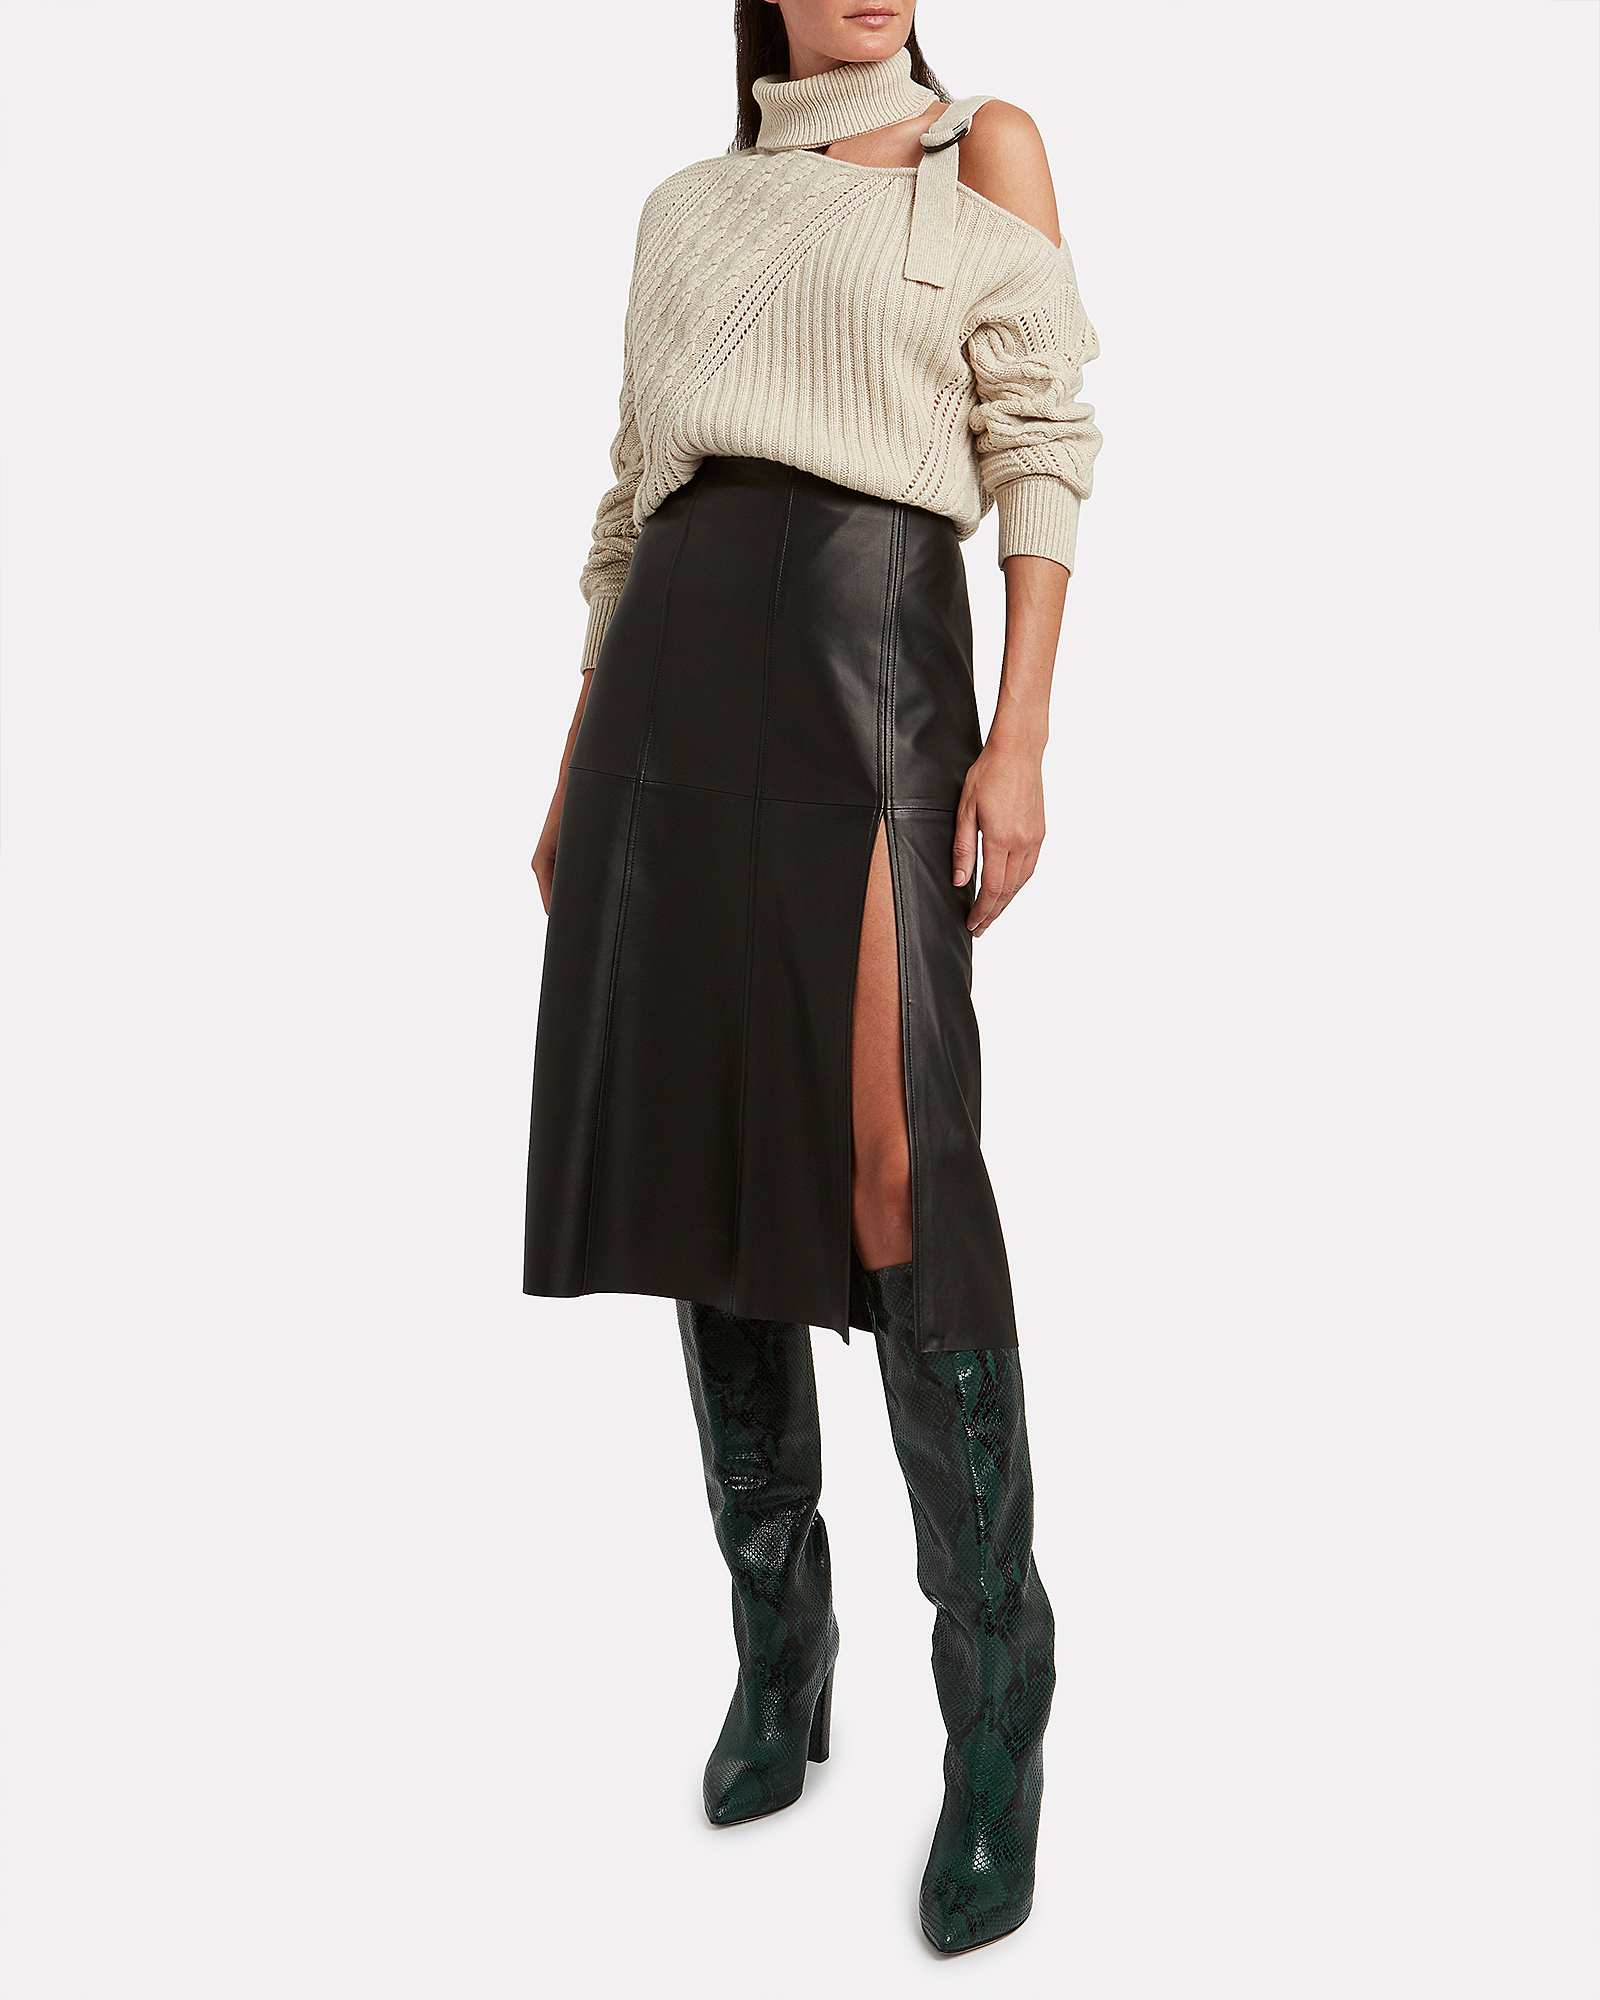 INTERMIX Private Label Paneled Leather Midi Skirt | INTERMIX®